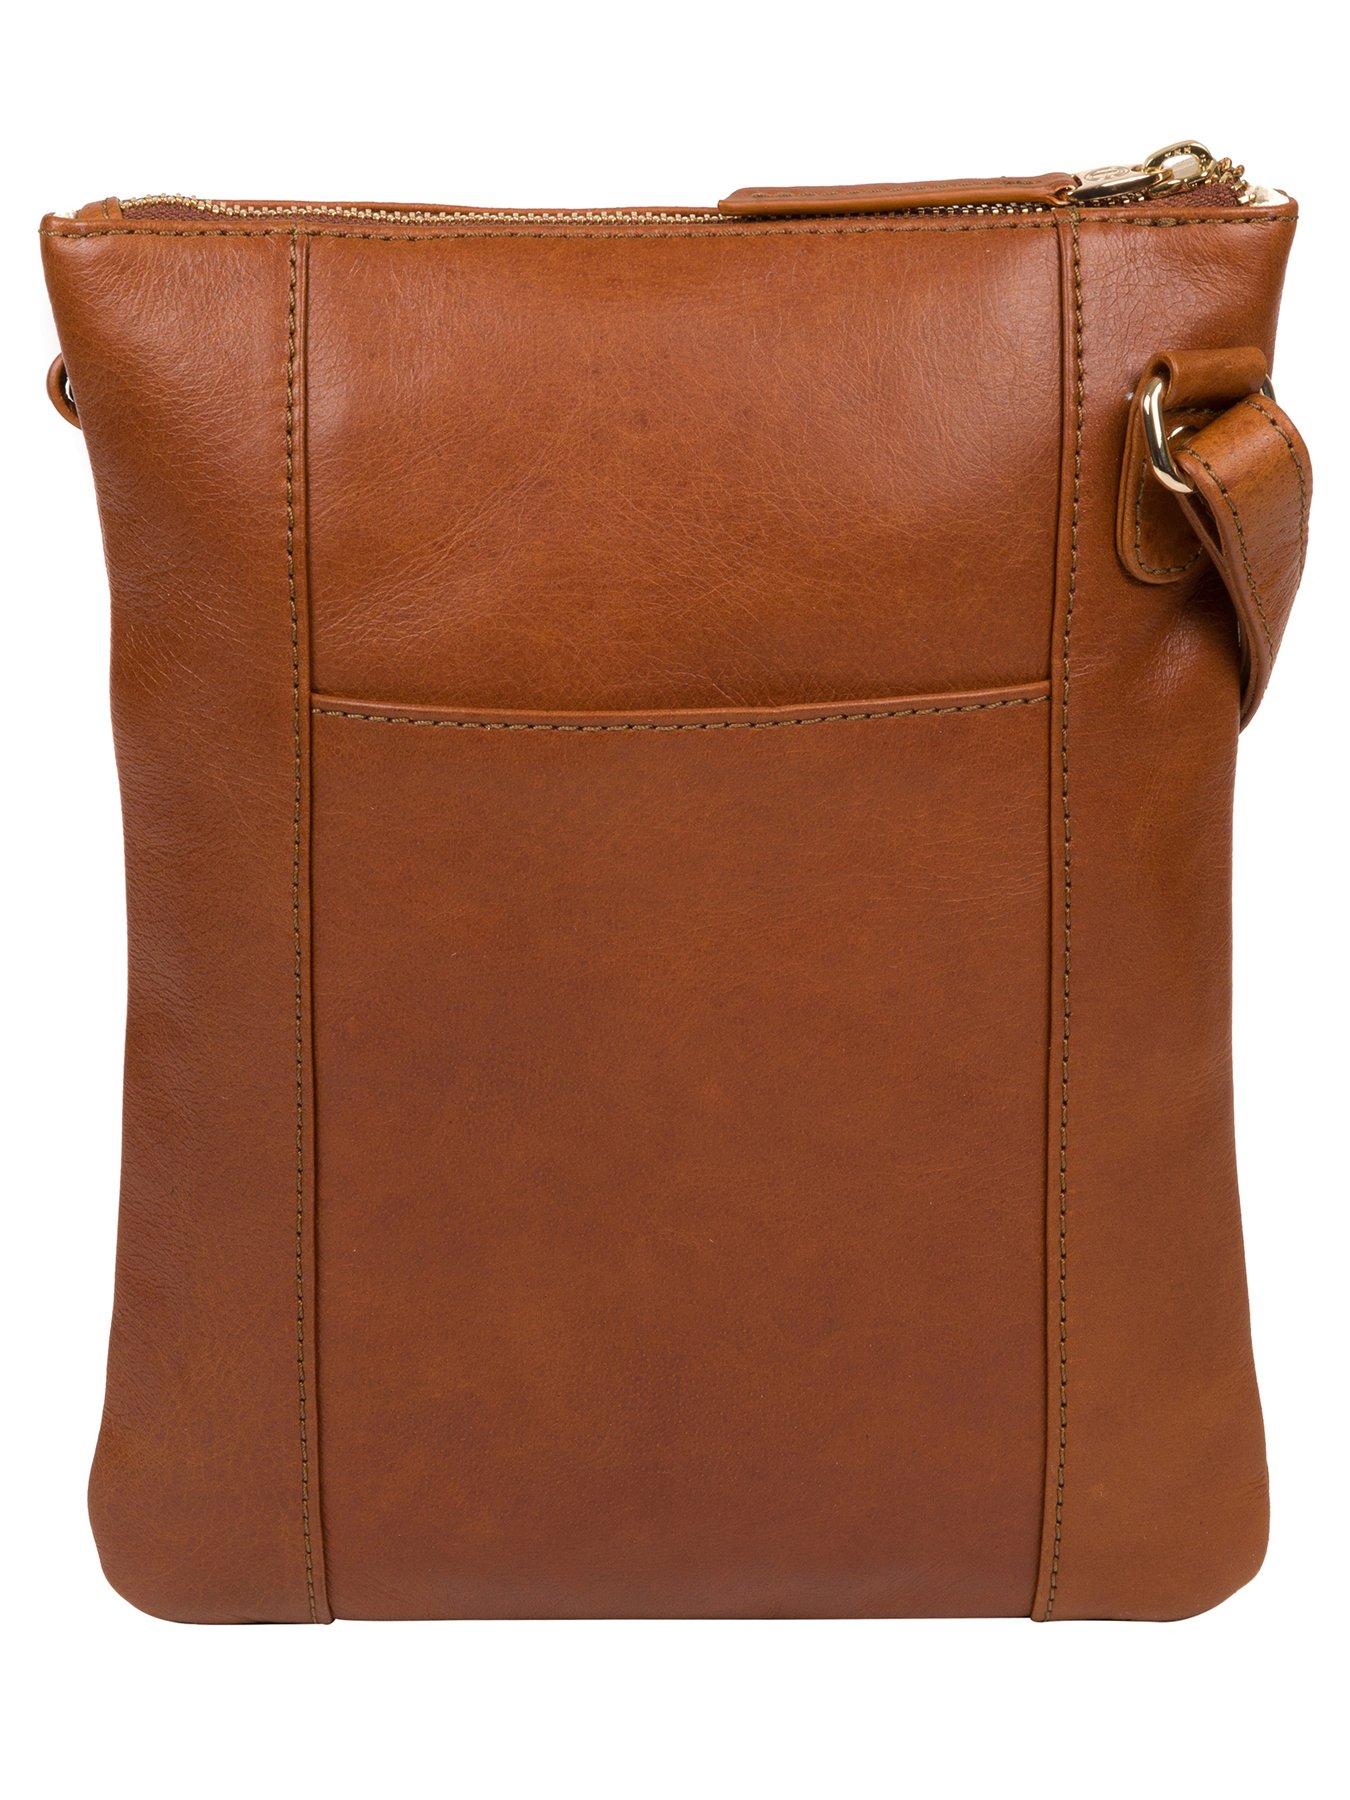 Bags & Purses Gardenia Leather Zip Top Cross Body Bag - Hazlenut